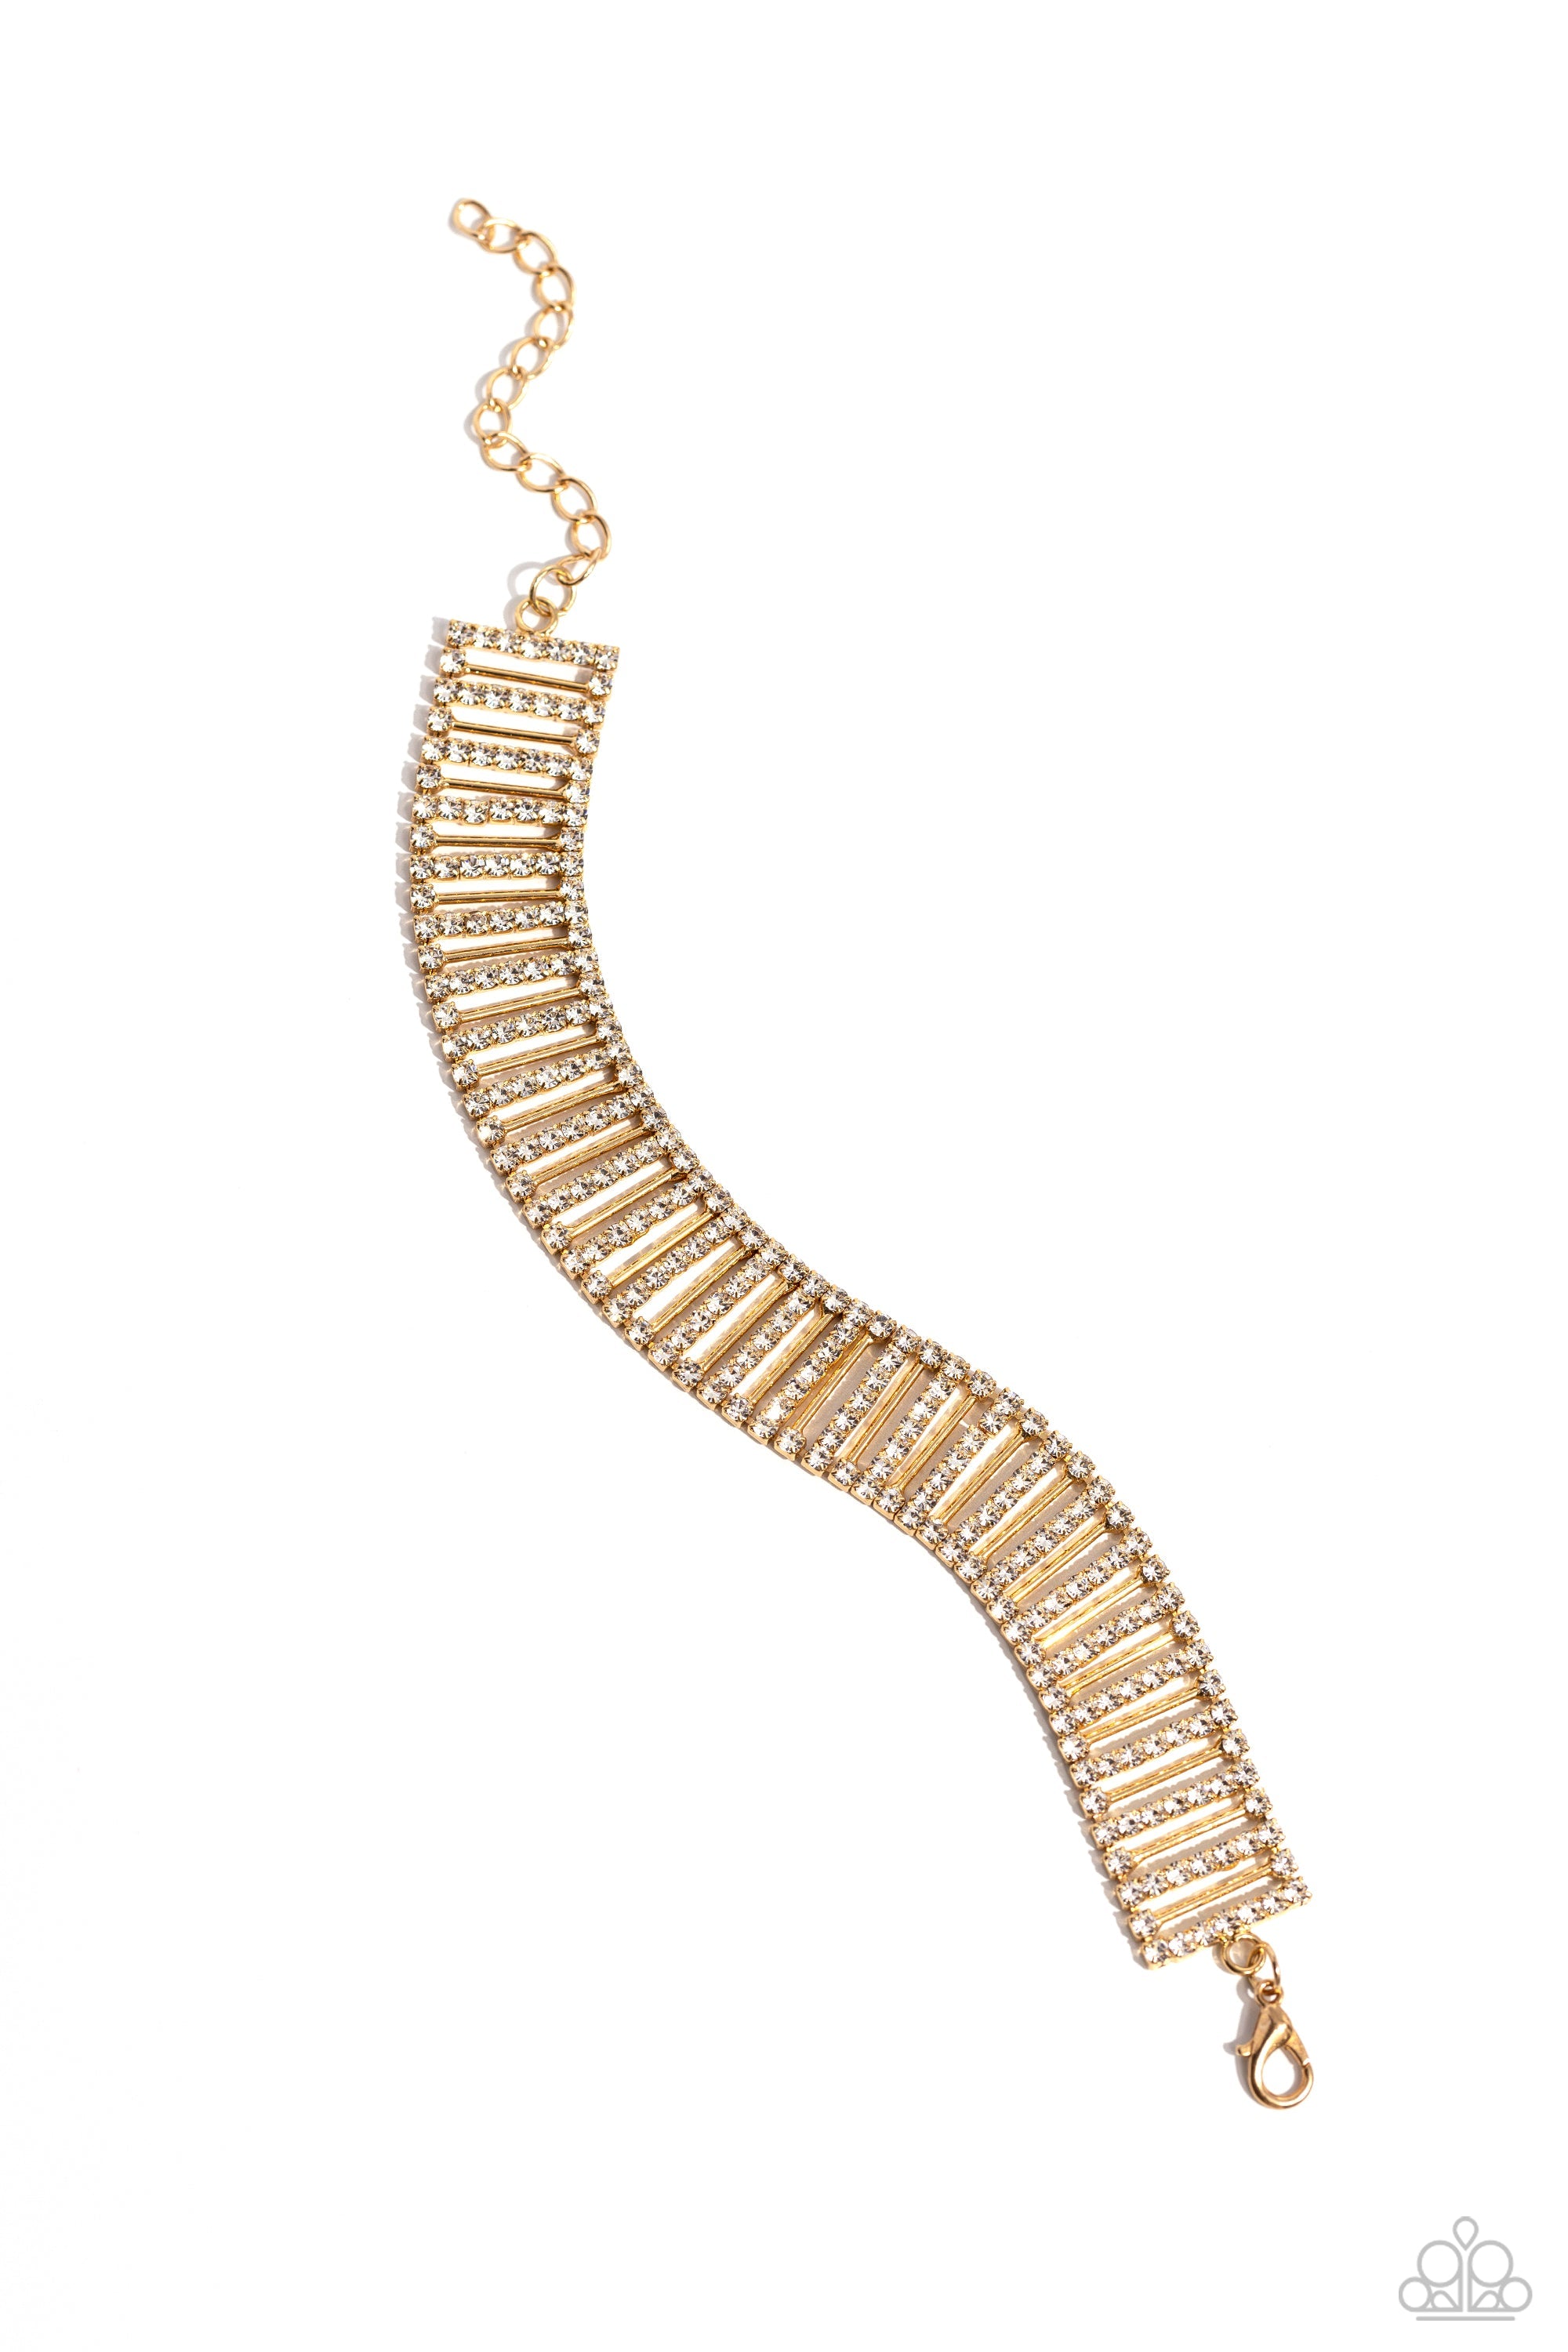 Elusive Elegance Gold & White Rhinestone Bracelet - Paparazzi Accessories- lightbox - CarasShop.com - $5 Jewelry by Cara Jewels